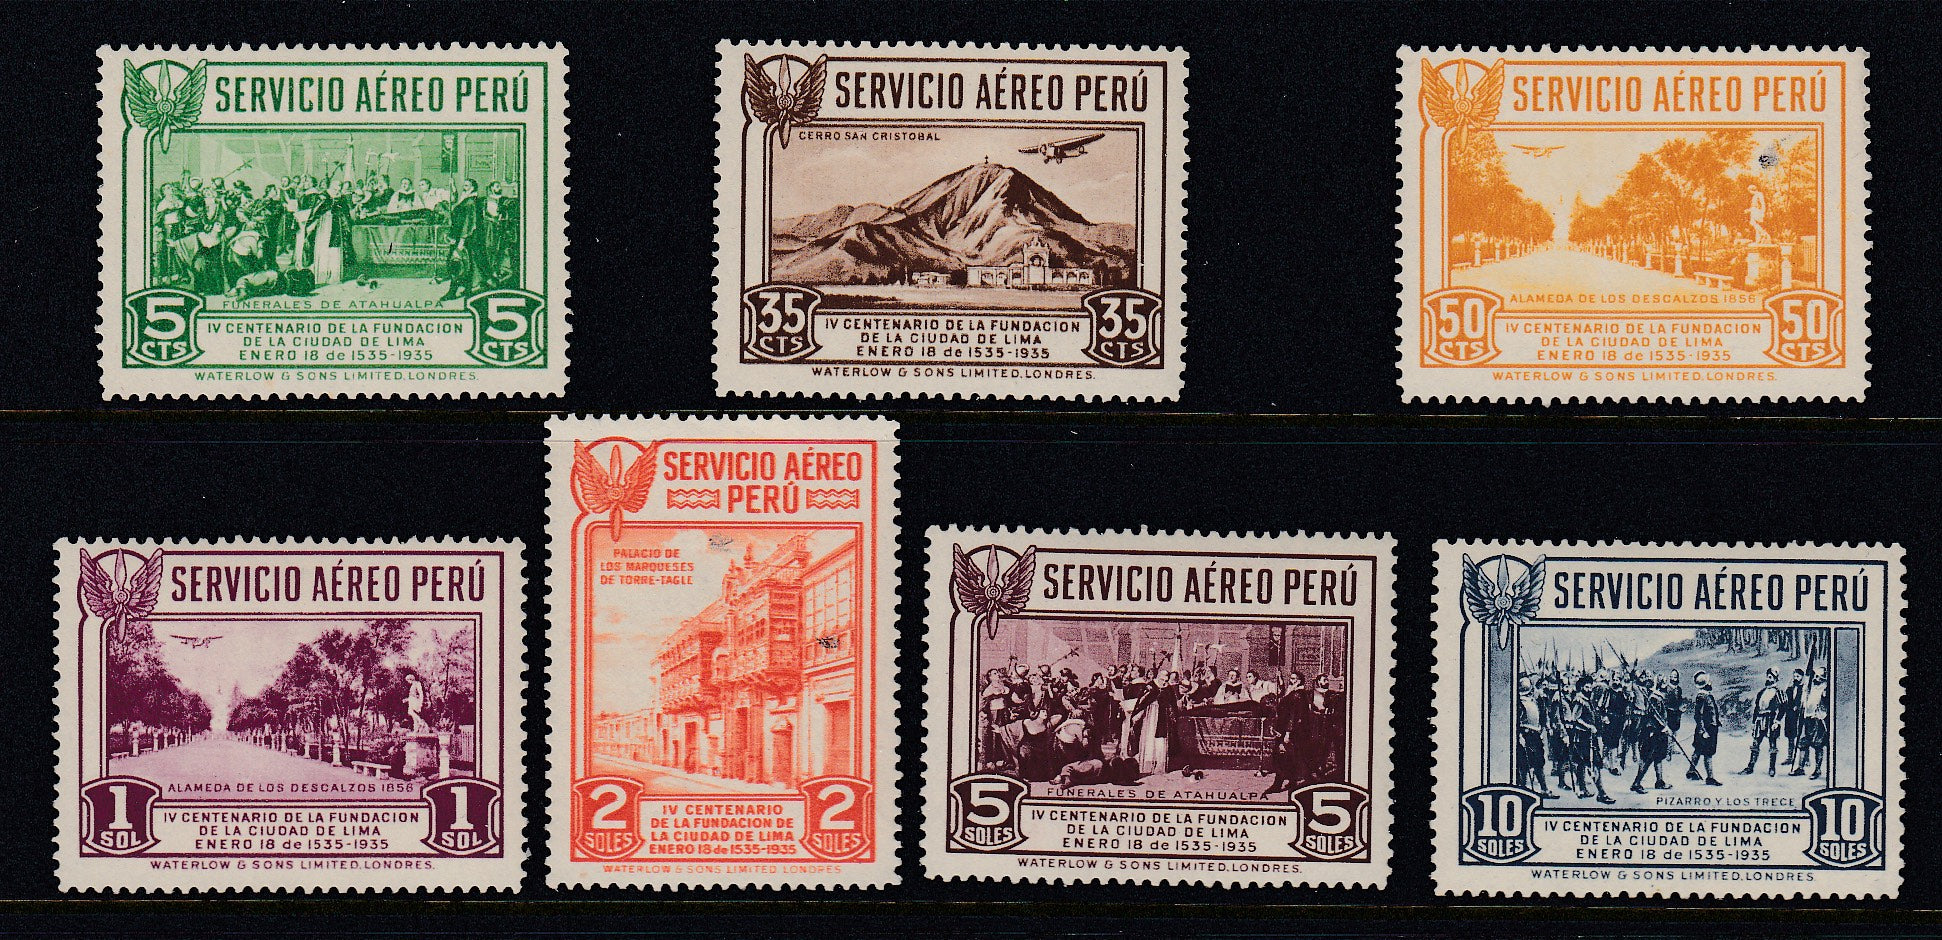 Peru 1935 4th Lima Founding Centenary Complete Airmail Set VLM Mint. Scott C6-C12